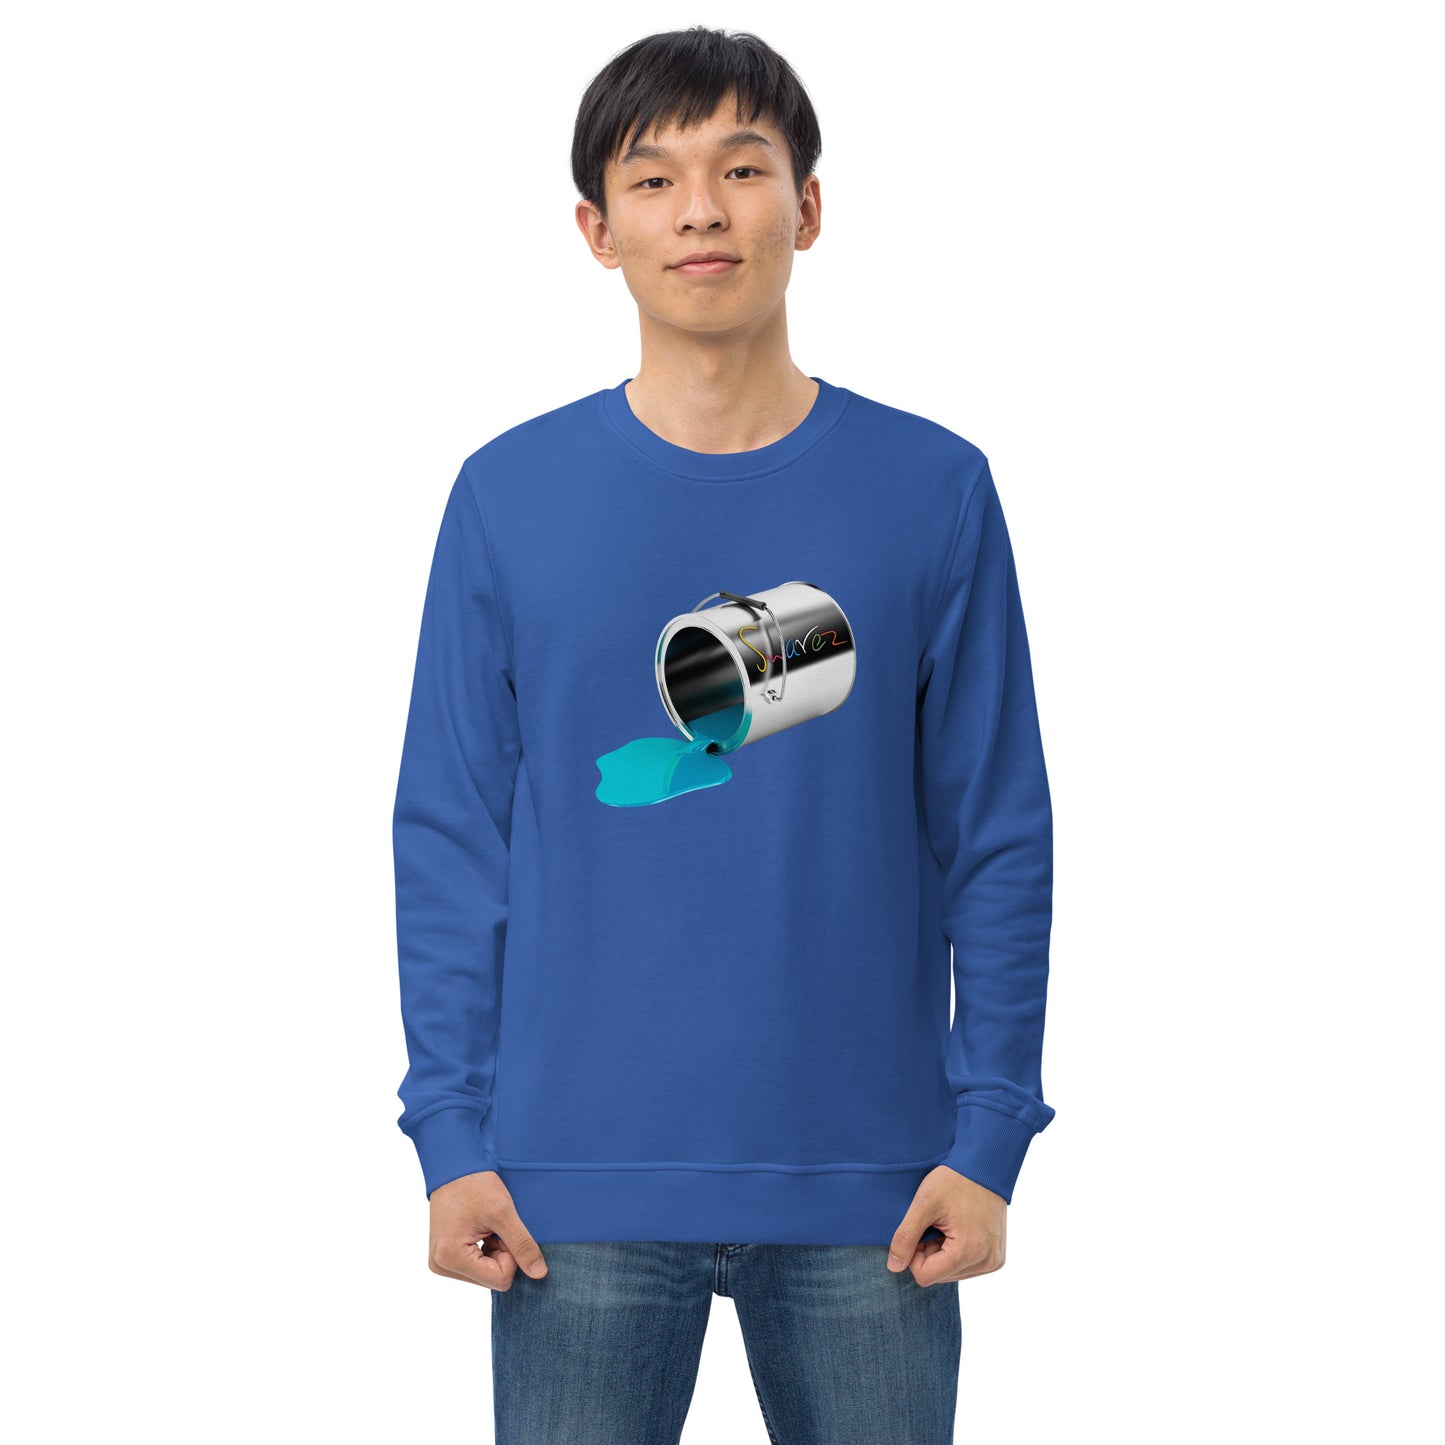 Unisex organic sweatshirt - Spilt paint design